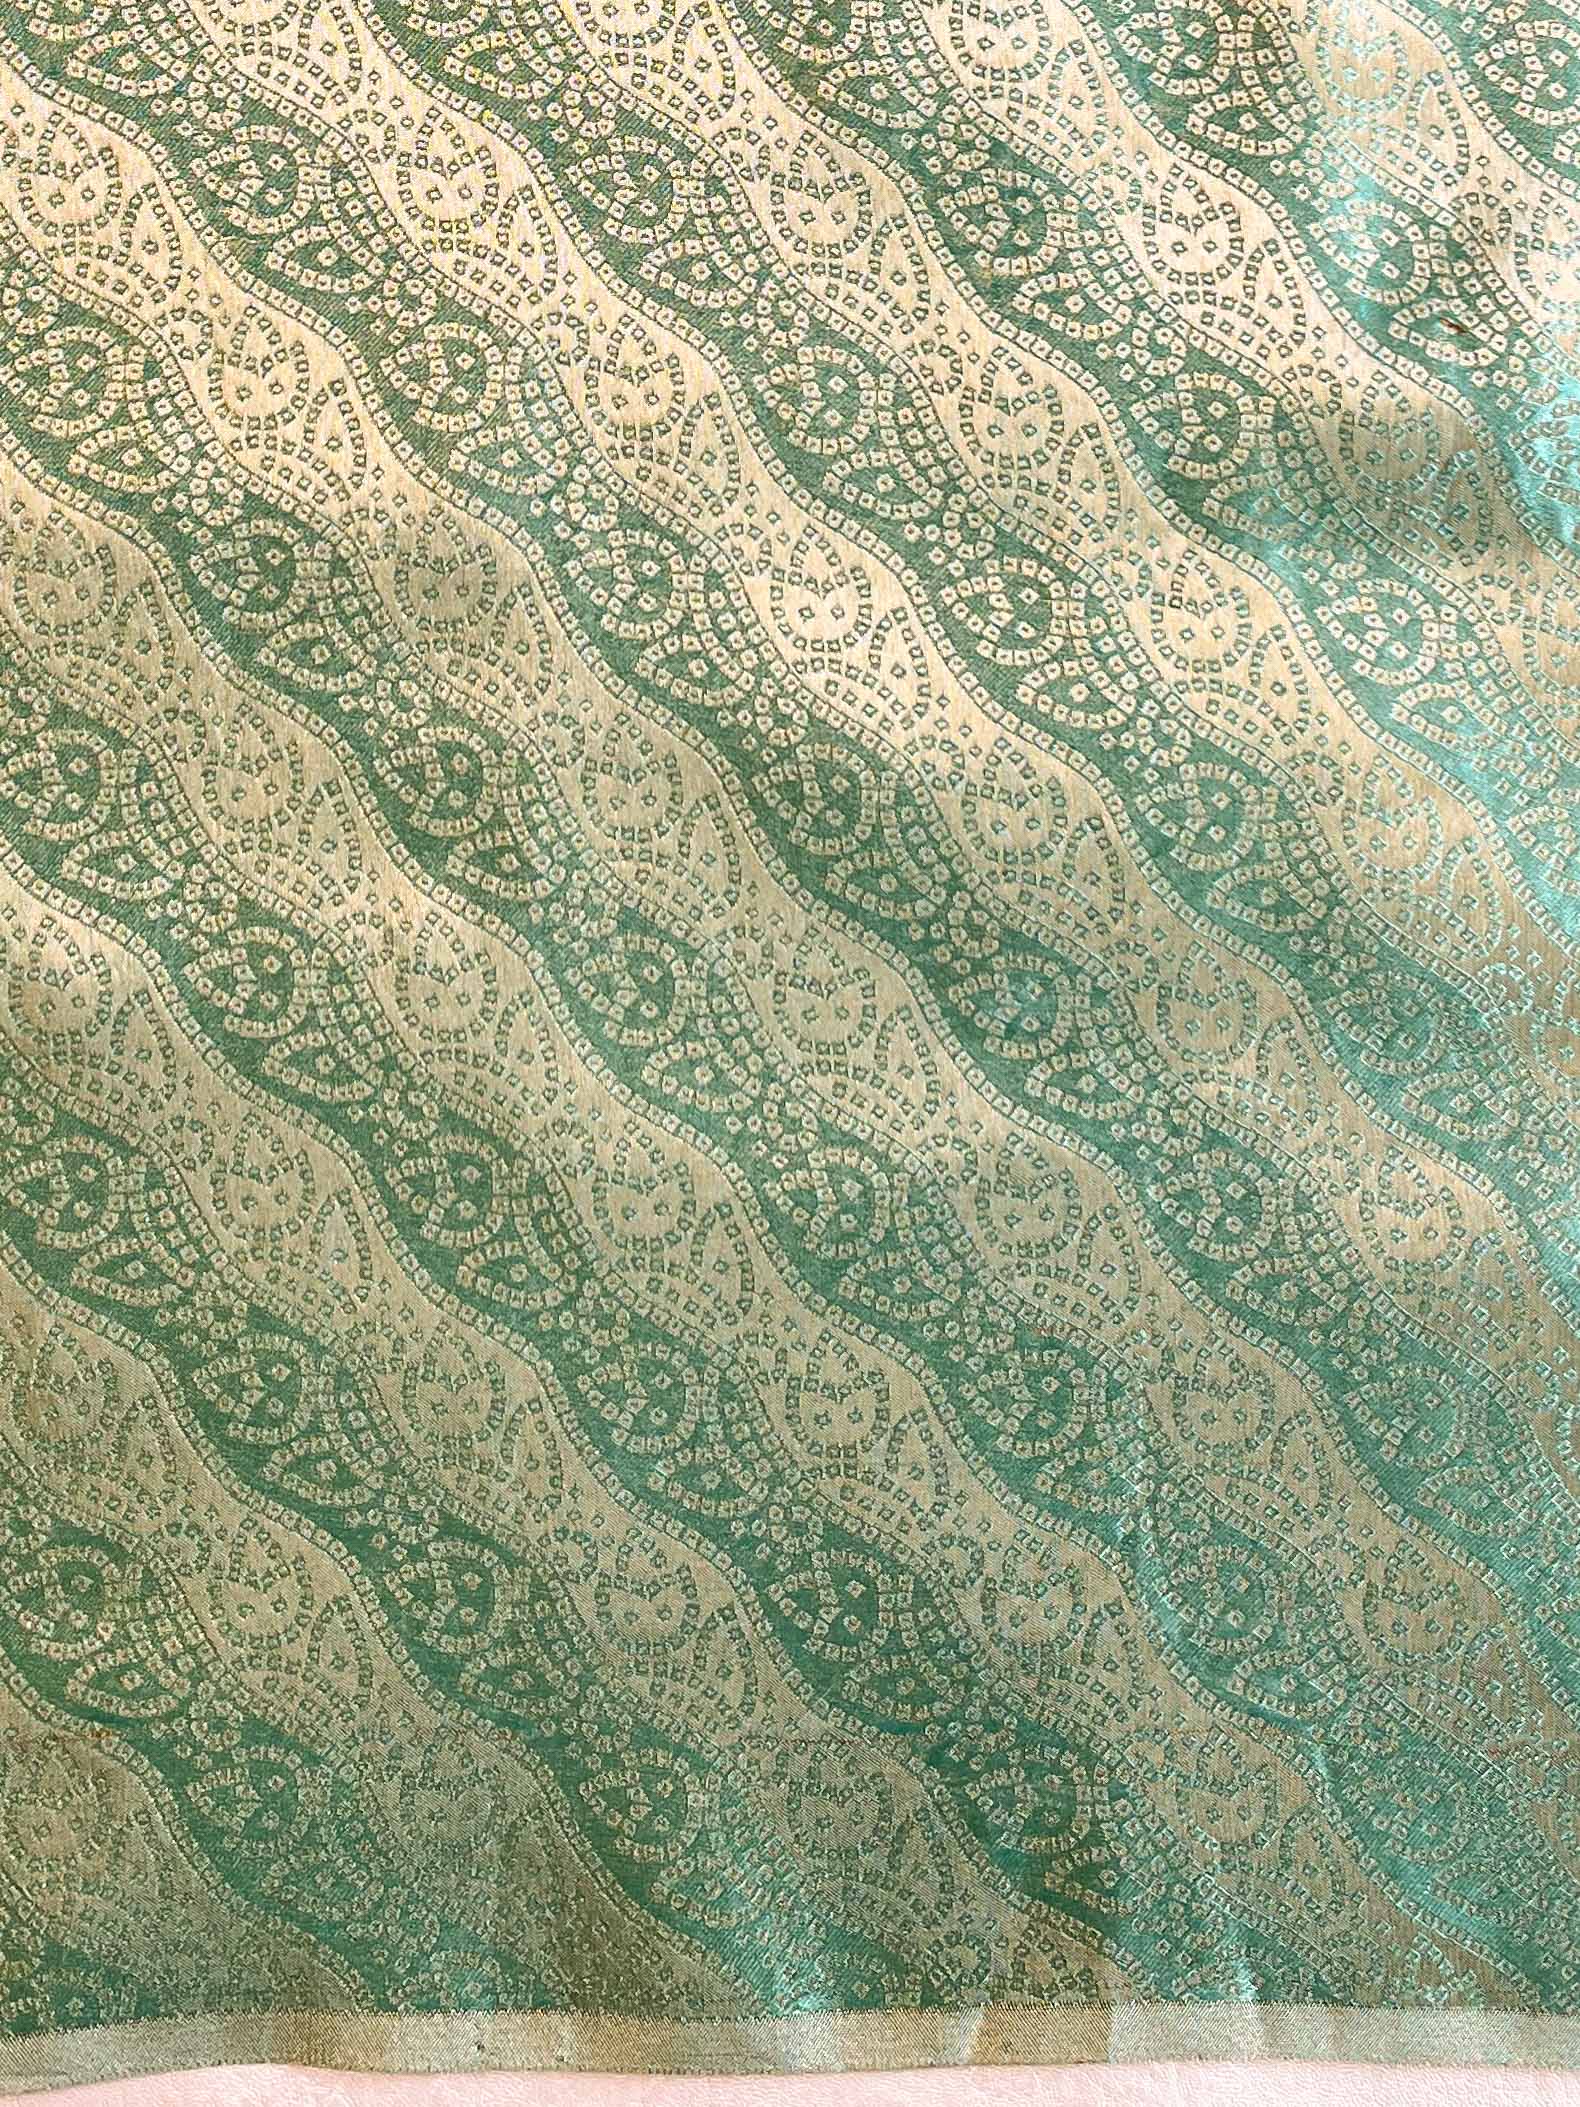 Banarasee Soft Chiffon Saree With Foil Print & Scallop Border-Green